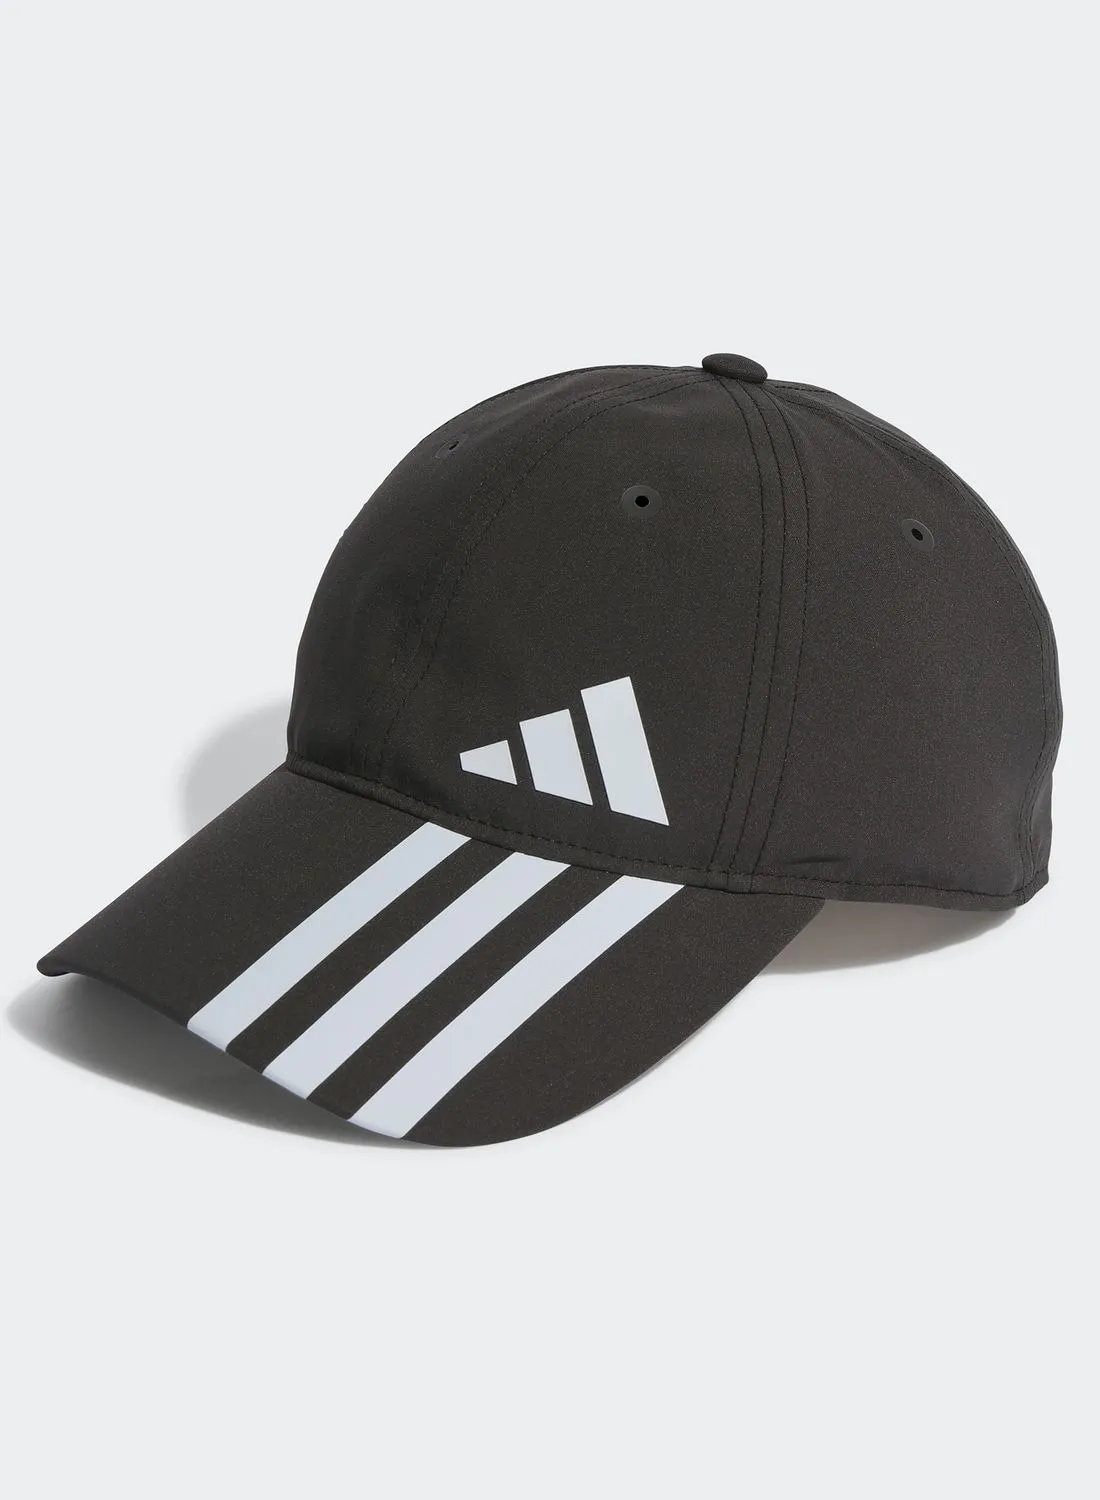 Adidas 3 Stripe Aeroready Baseball Cap